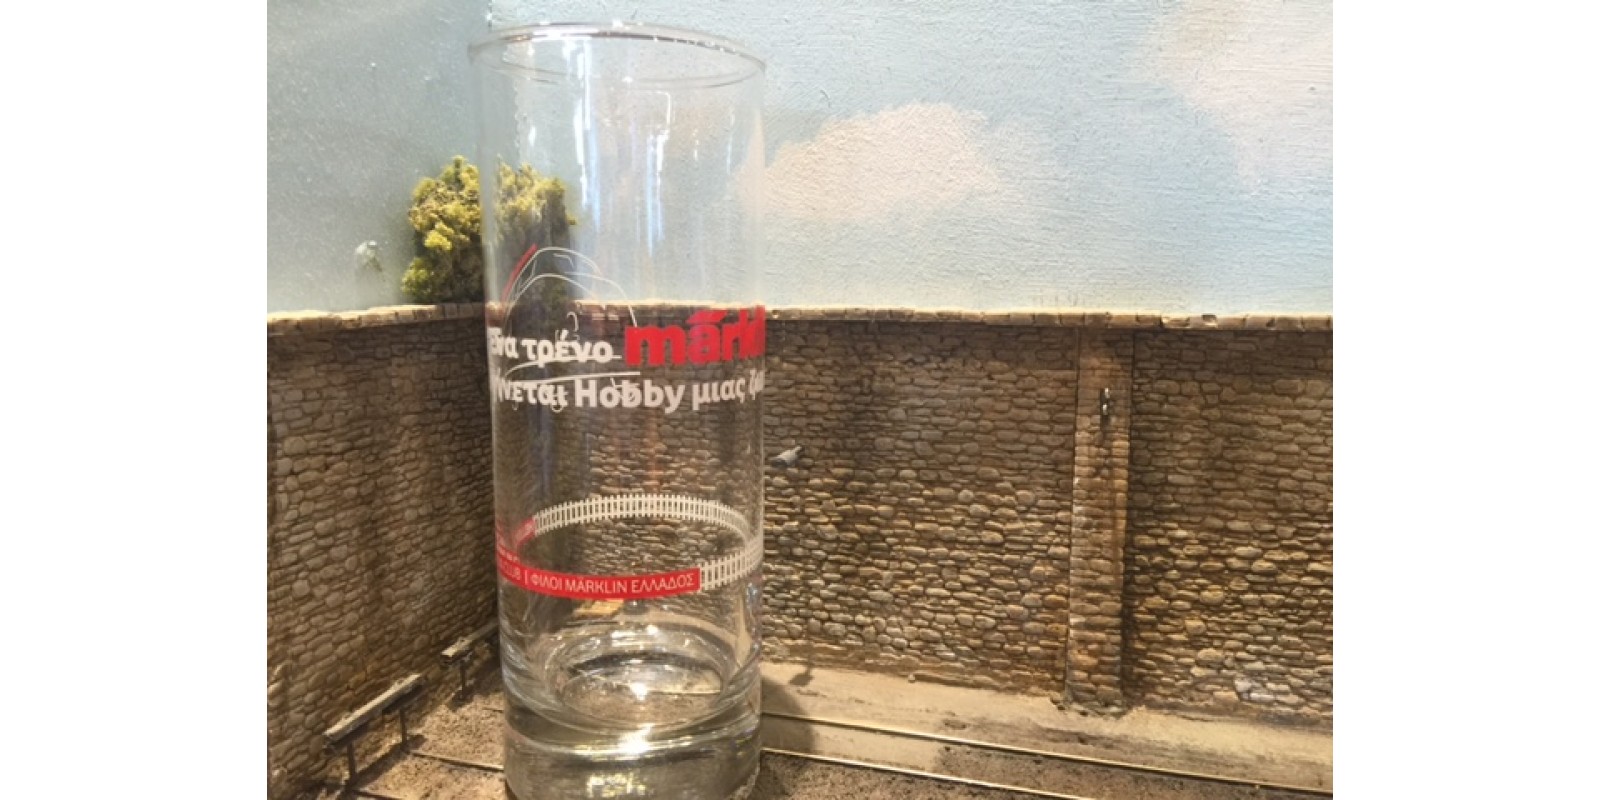 HMC002 Υάλινο ποτήρι για νερό/ μπύρα με το λογότυπο των ΦΙΛΩΝ MÄRKLIN ΕΛΛΑΔΟΣ